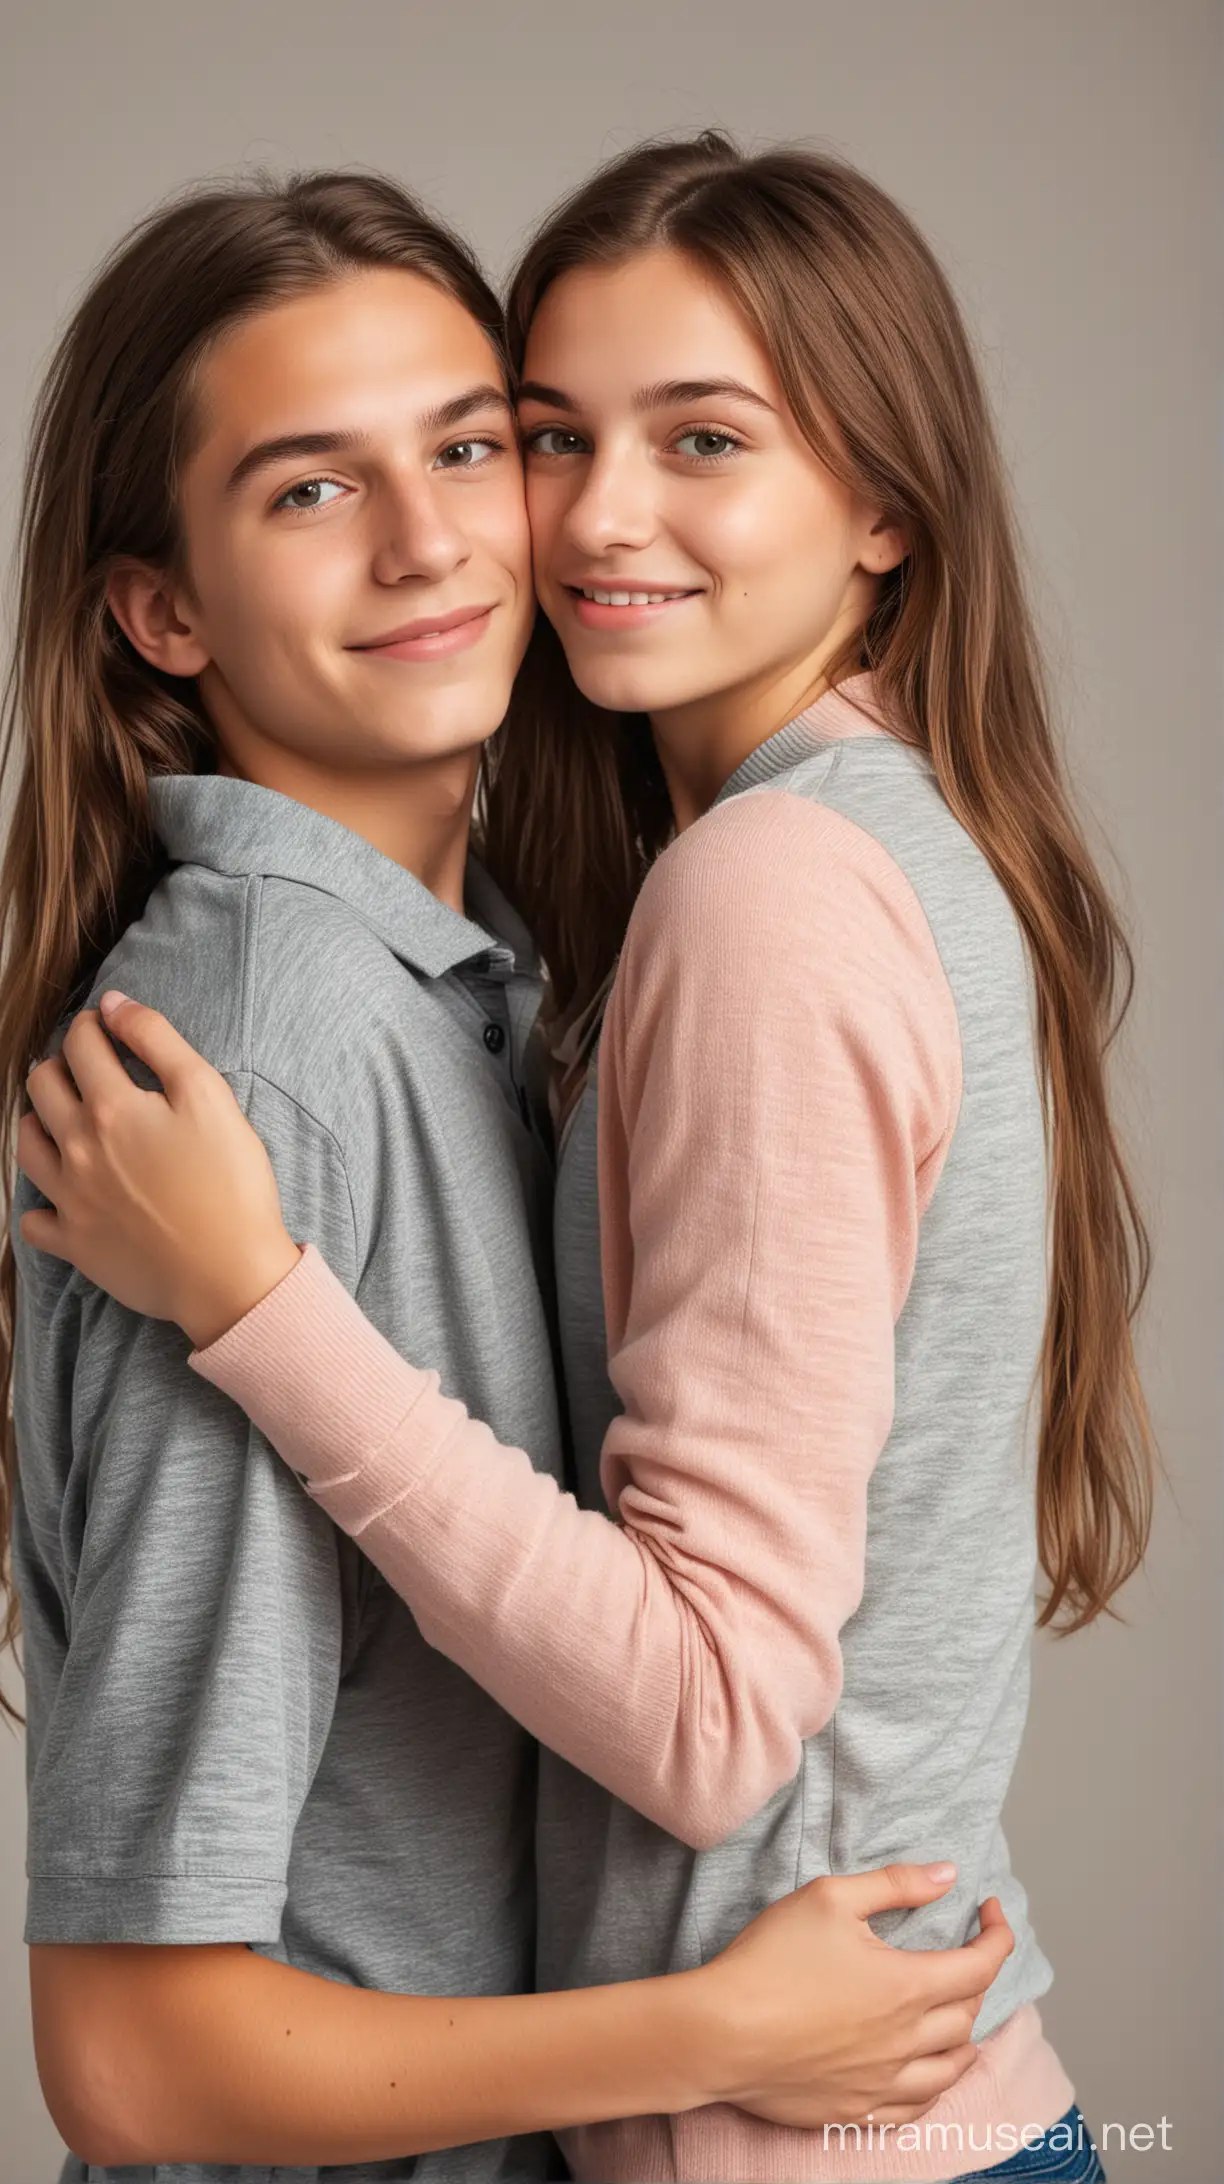 Teen Twin Siblings Embracing in Tender Affection